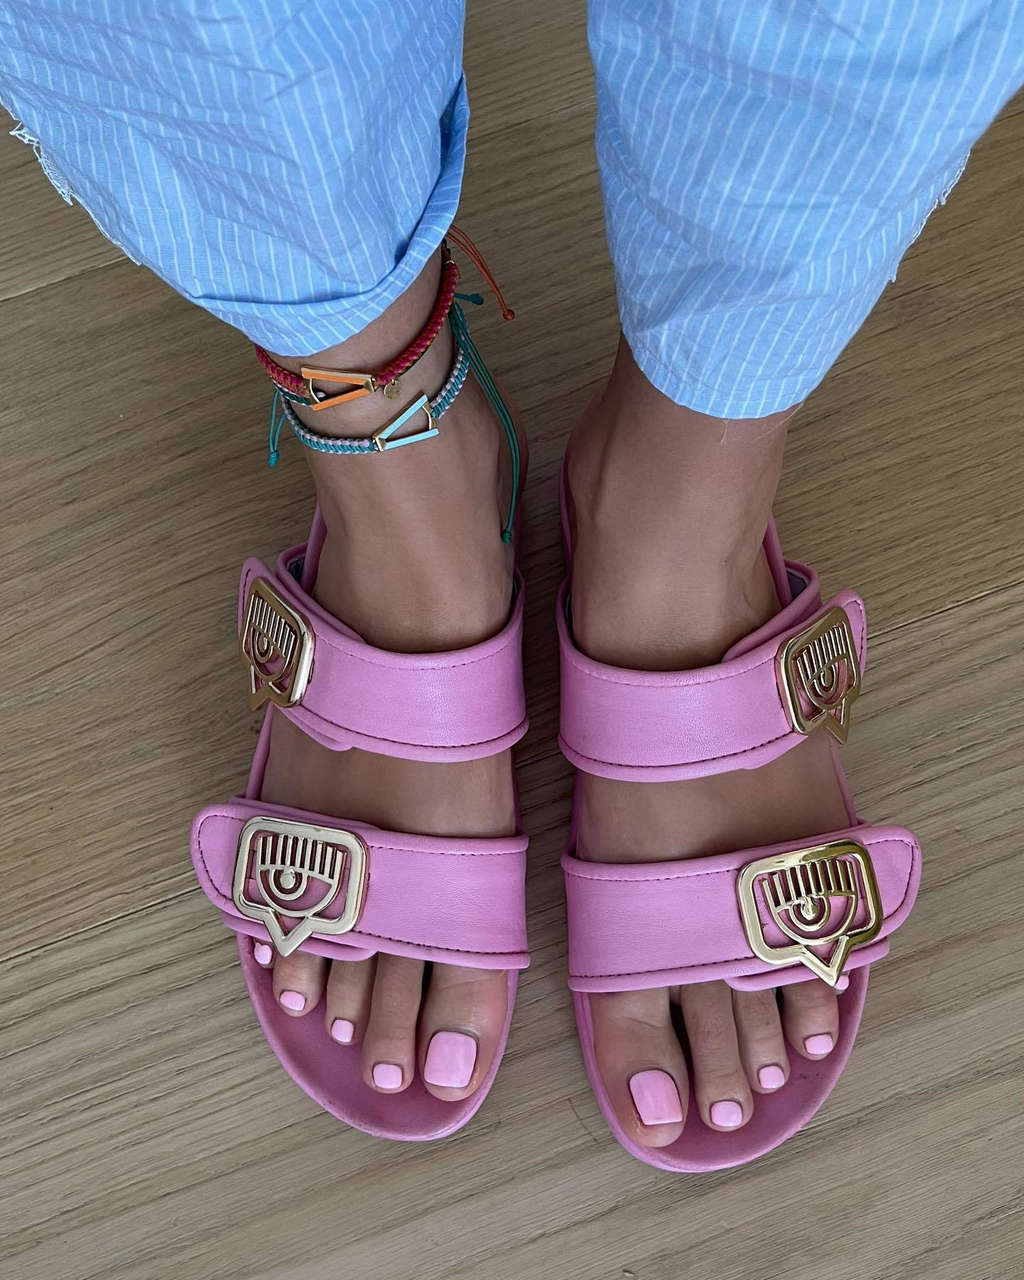 Chiara Ferragni Feet